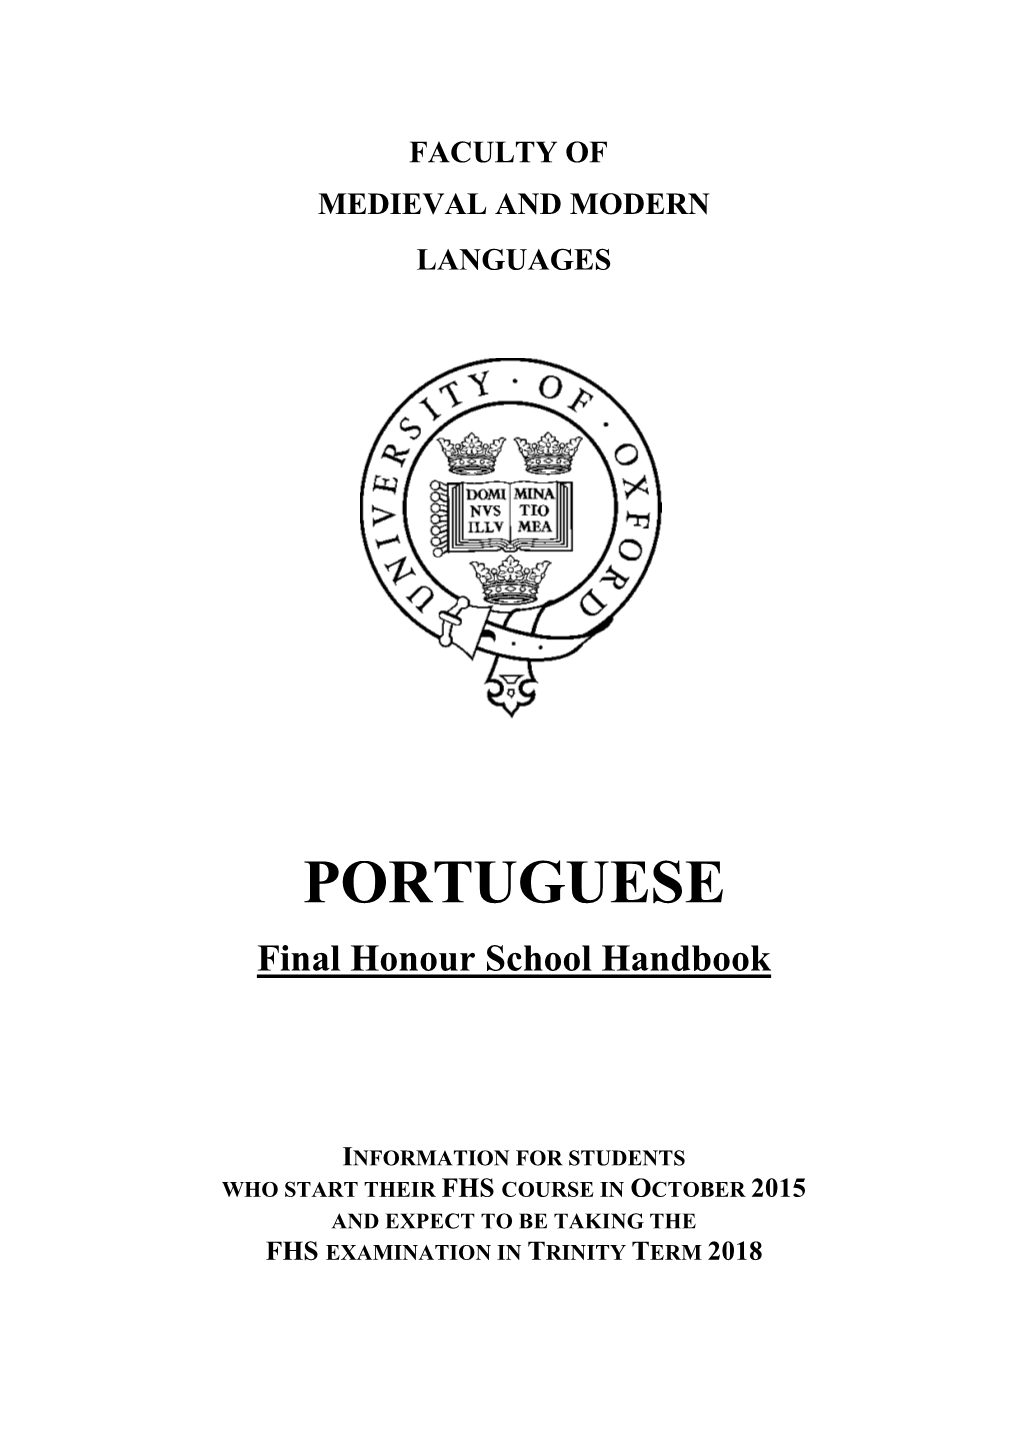 PORTUGUESE Final Honour School Handbook